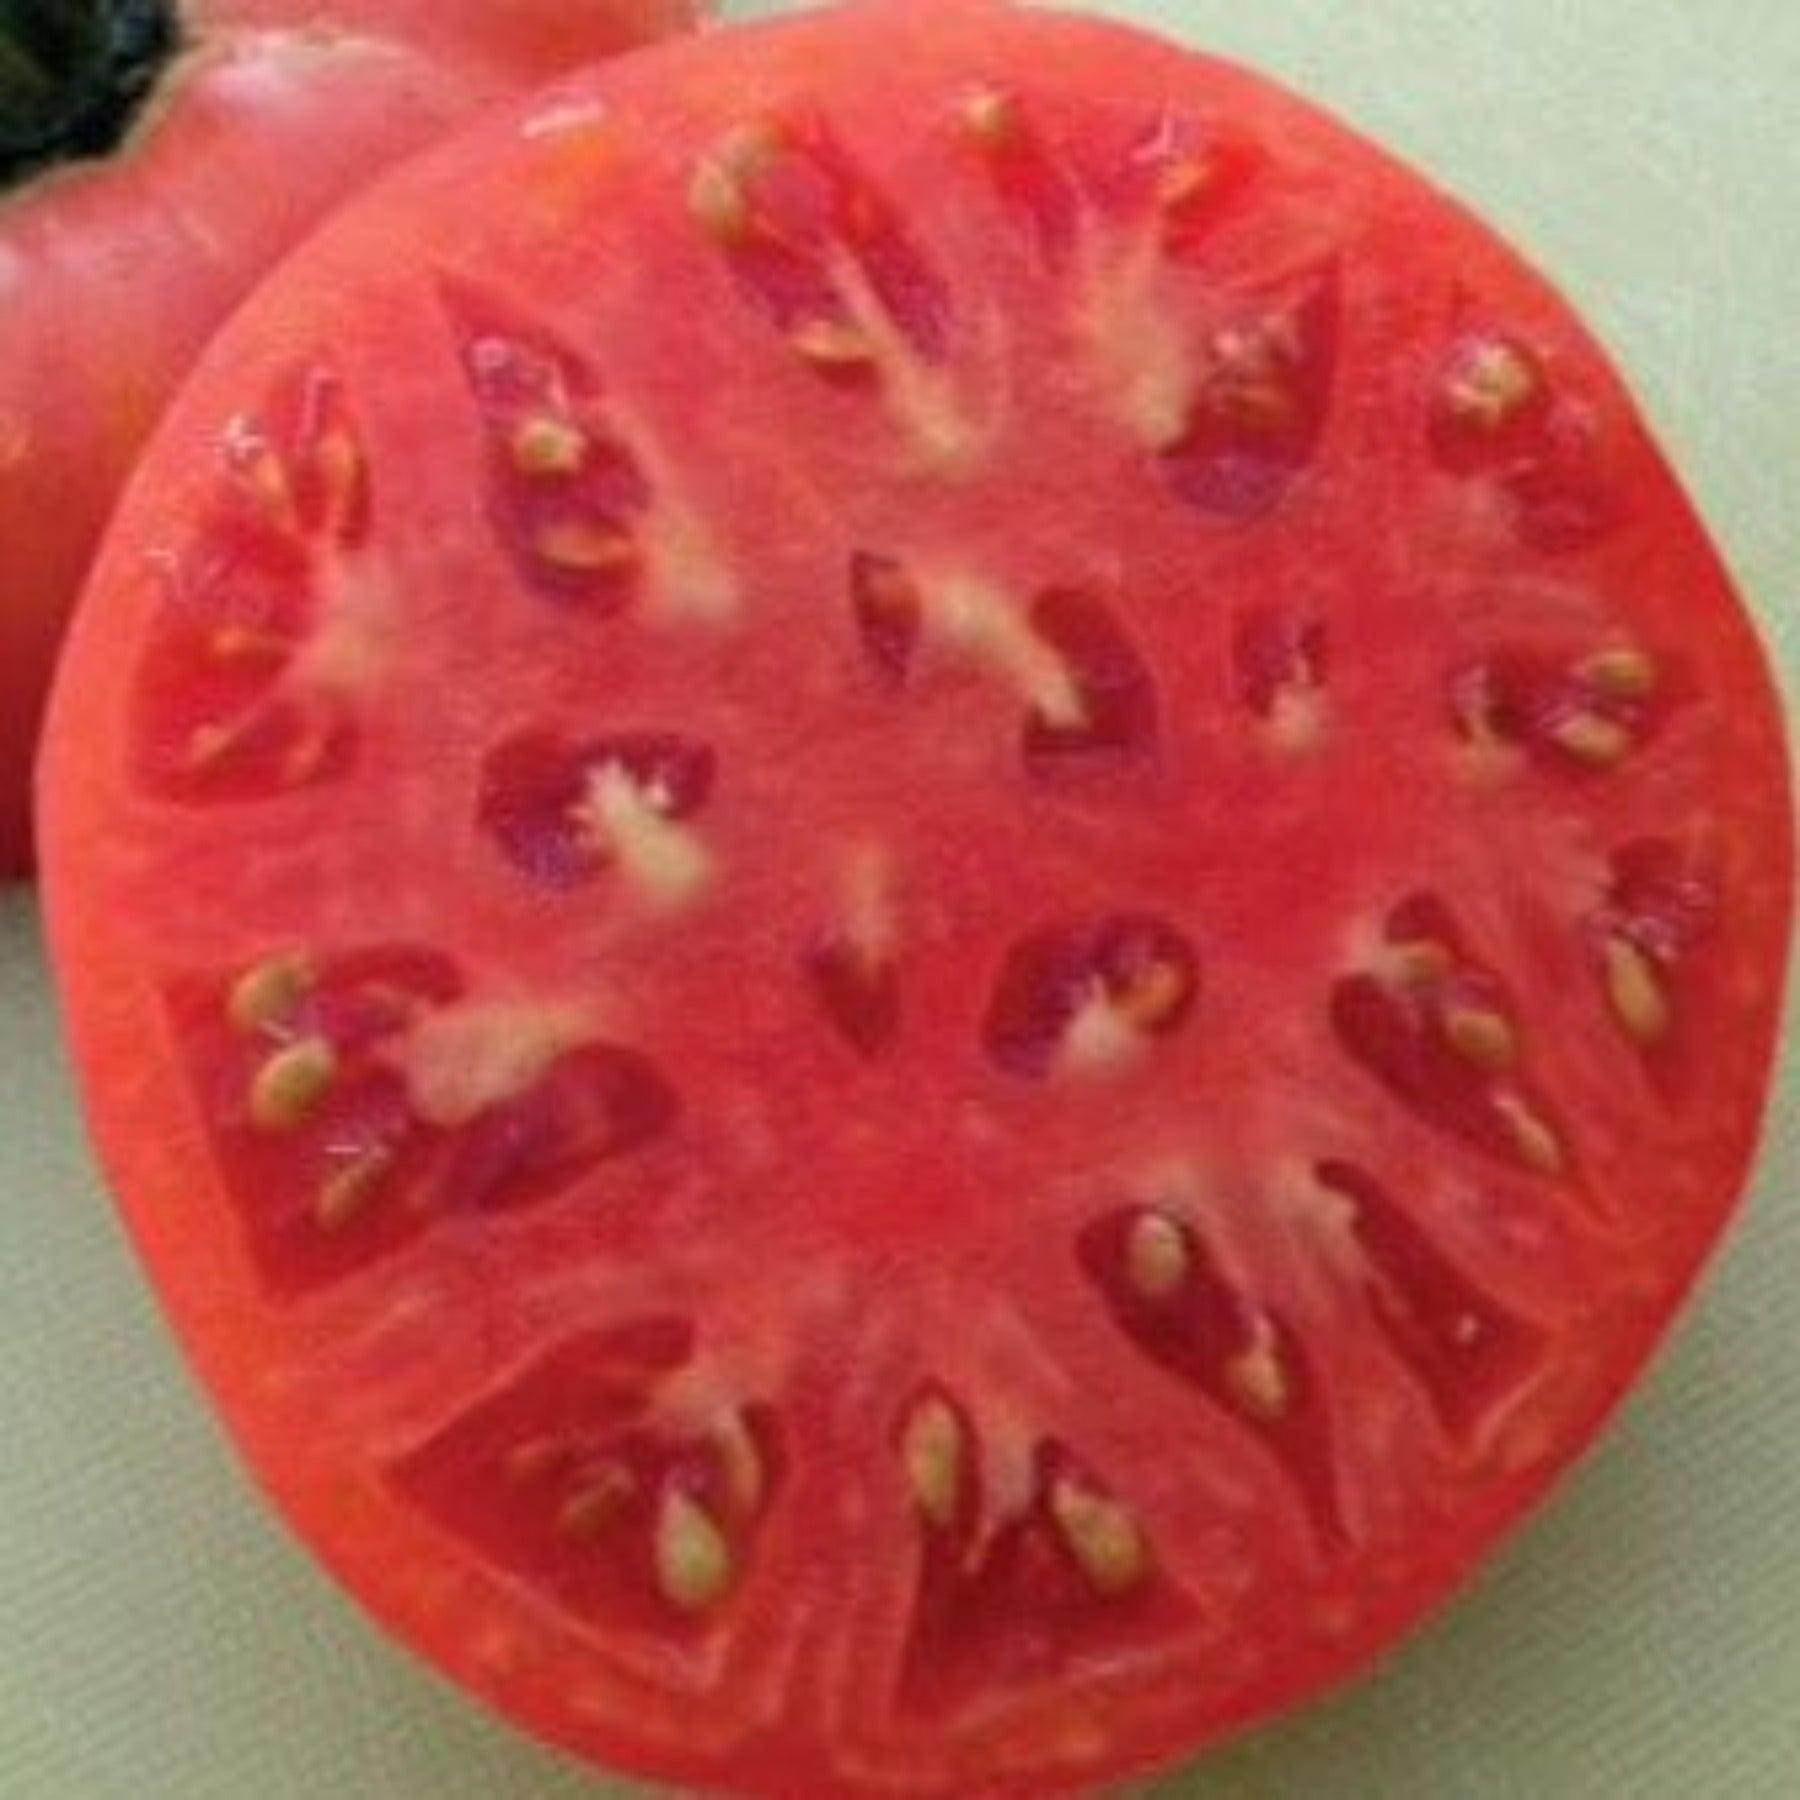 Where to Buy Tomato - Brandywine, Pink (Indeterminate) seeds